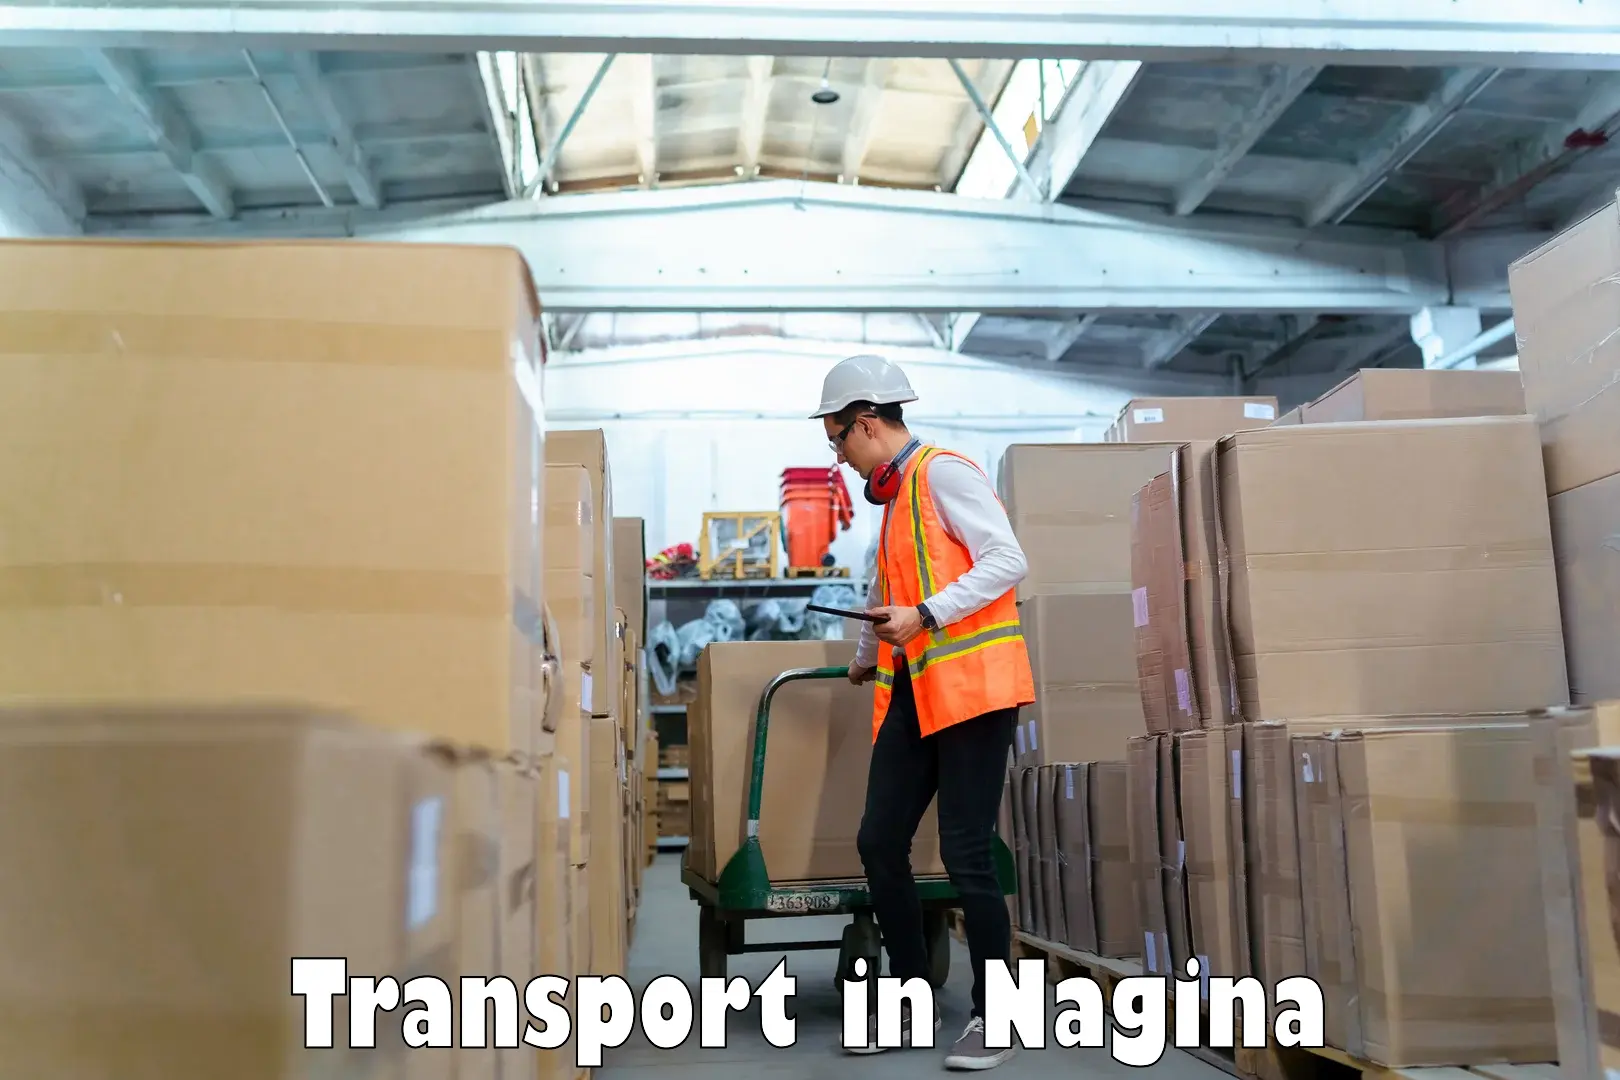 Daily parcel service transport in Nagina